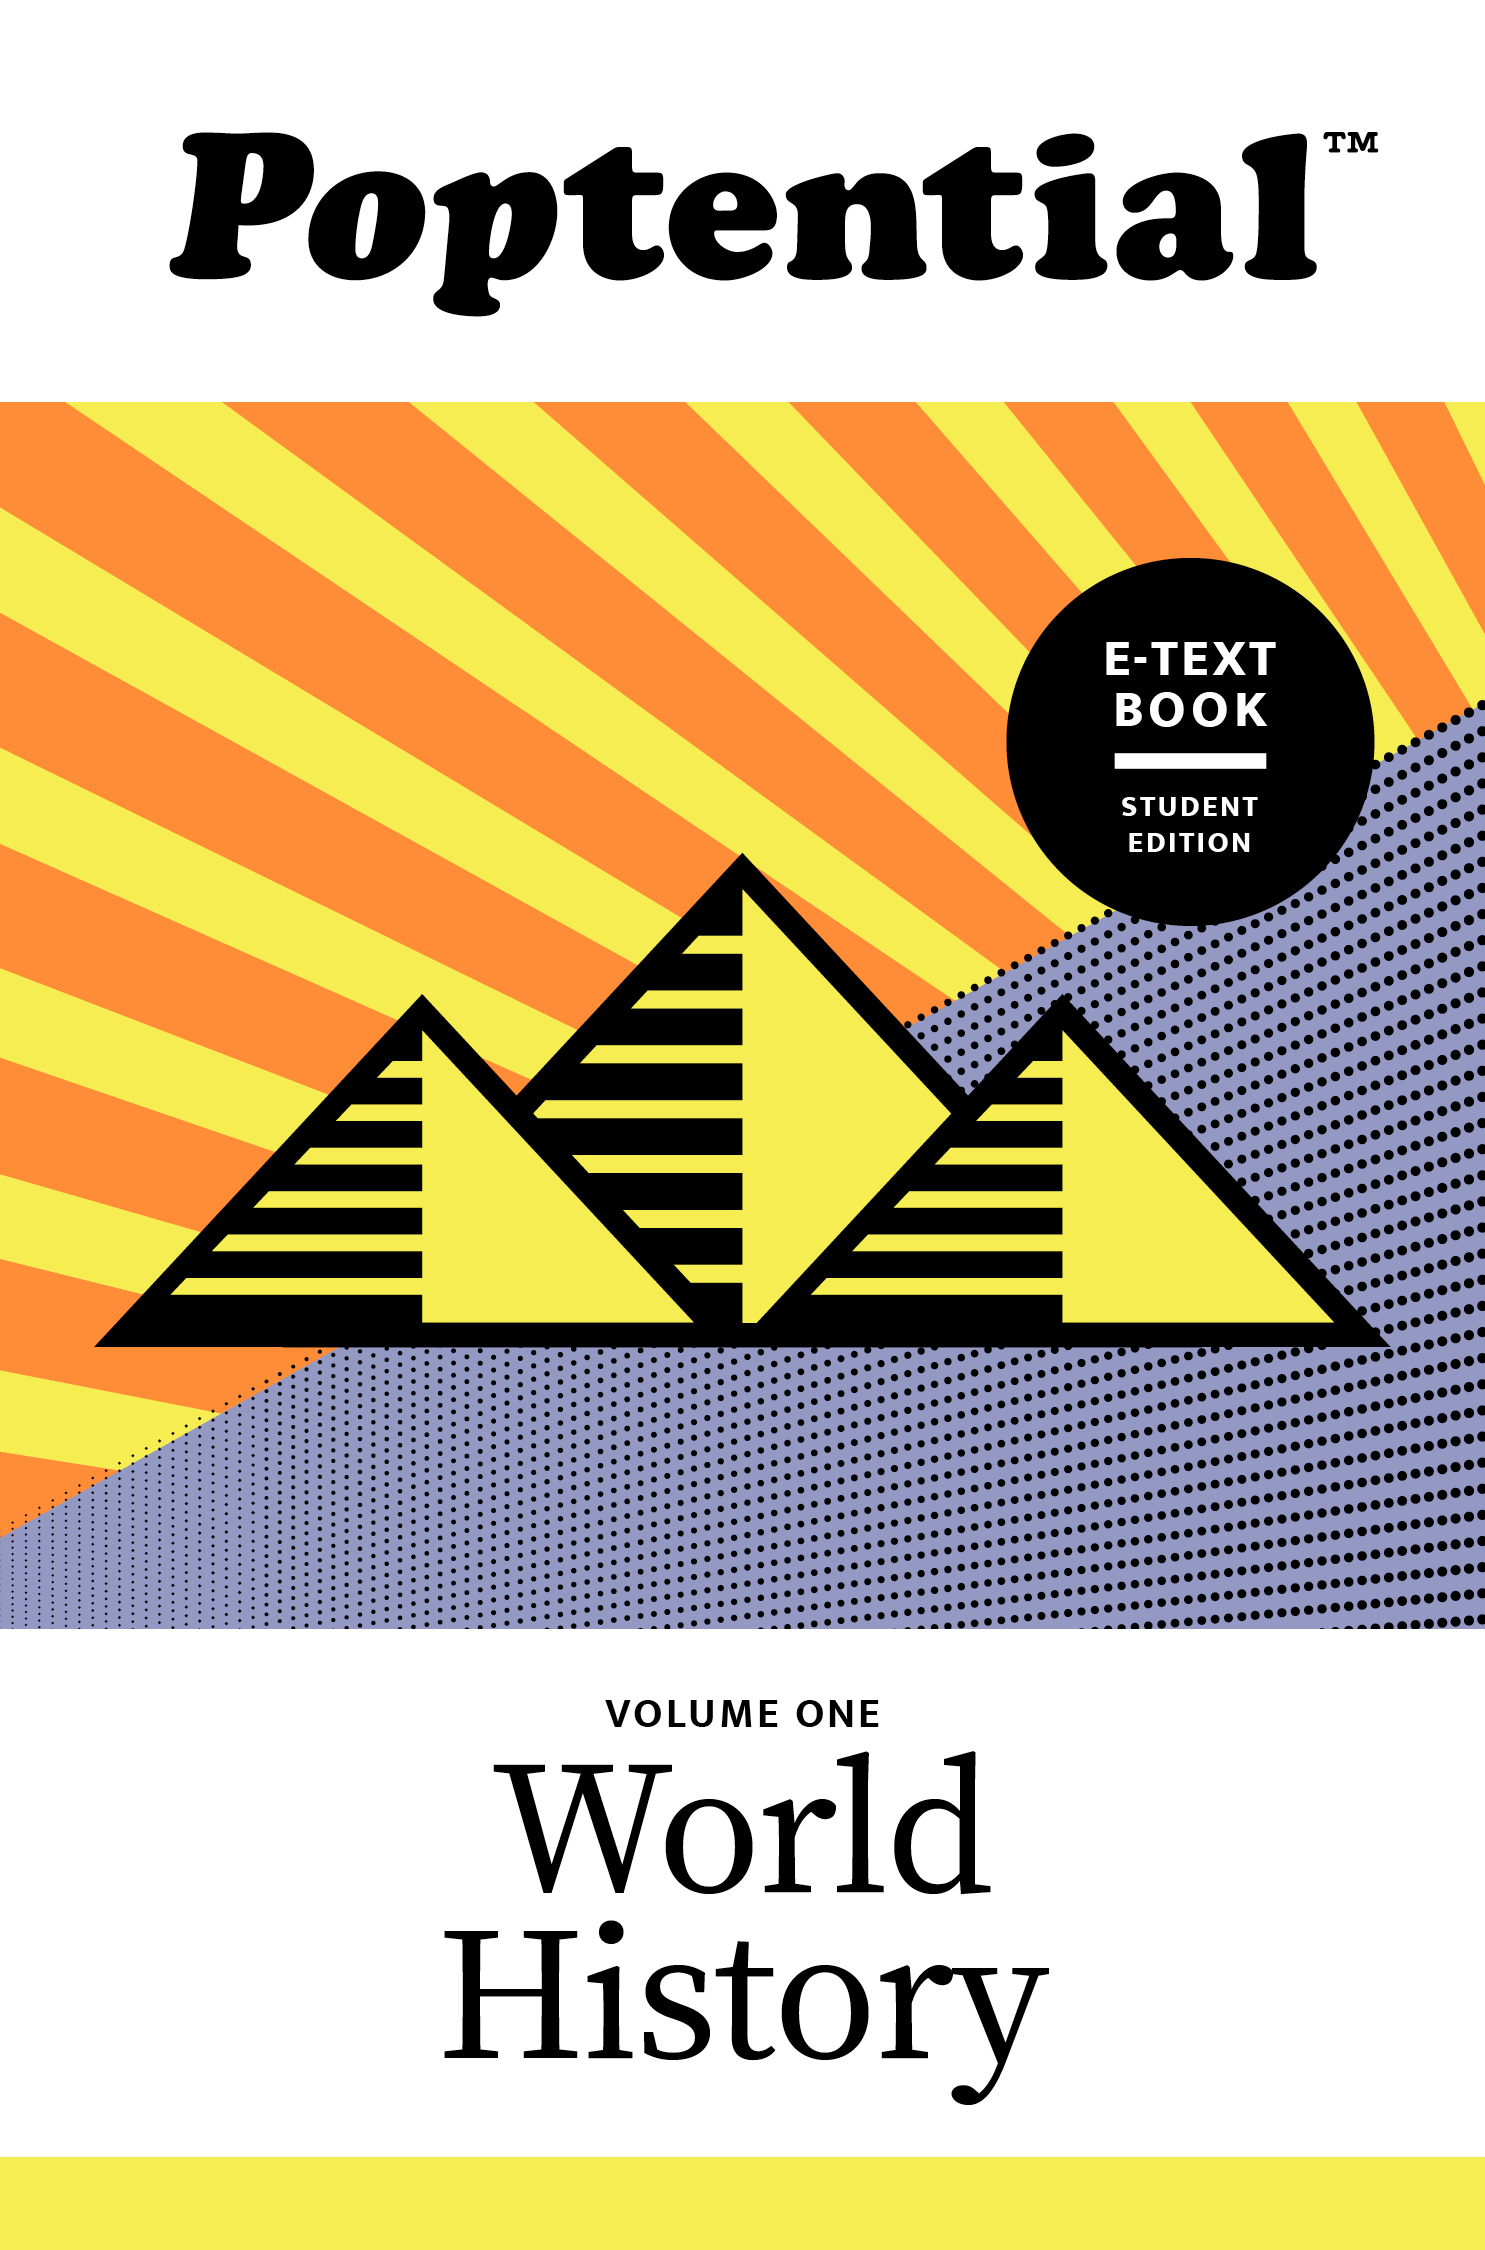 World History Volume 1 – E-Textbook (Student Edition)